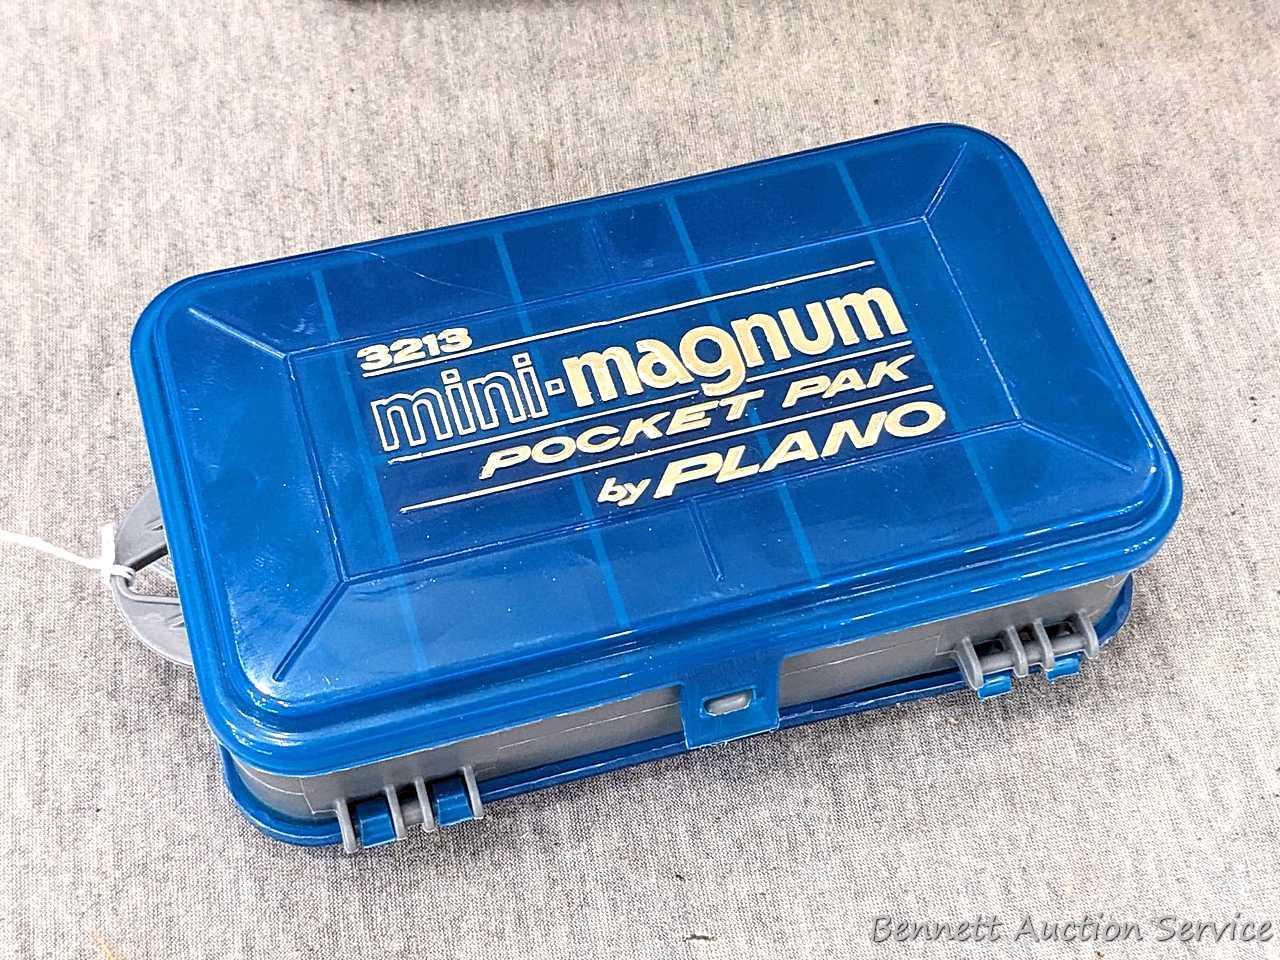 Plano 3213 Mini Magnum Pocket Pak 2 Sided Fishing Tackle Box Plus Some  Tackle